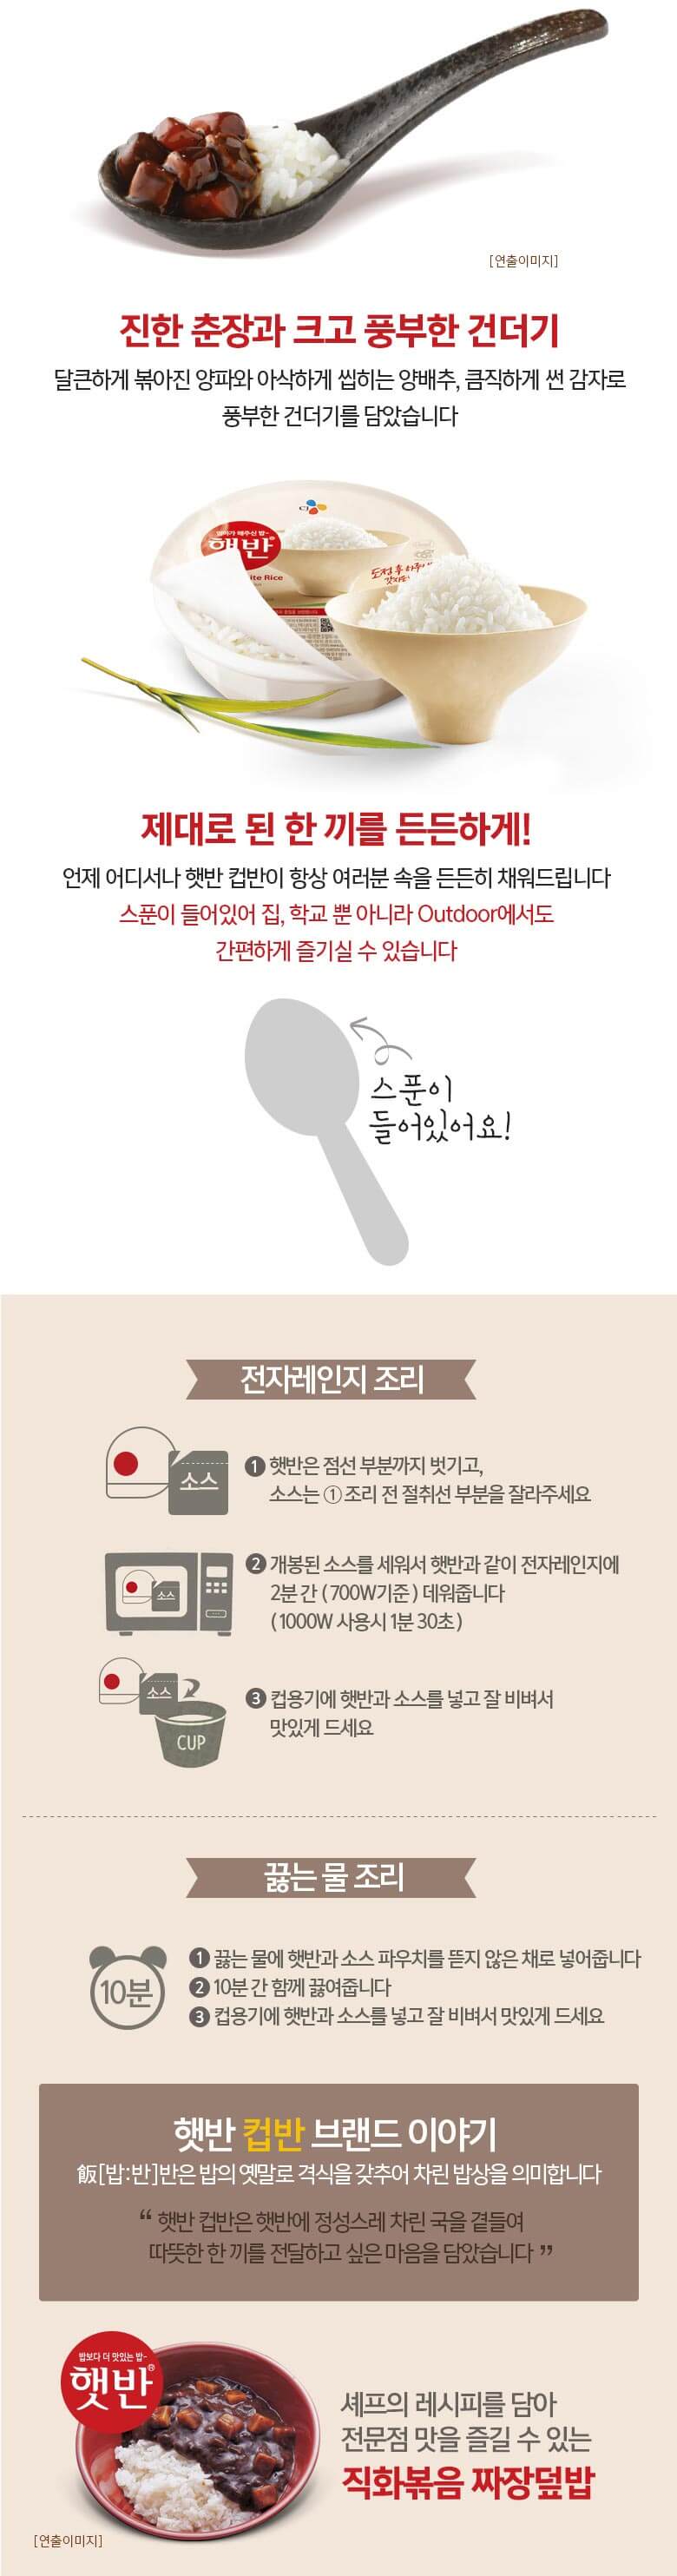 韓國食品-[CJ] Cup Rice[Jjajang] 280g